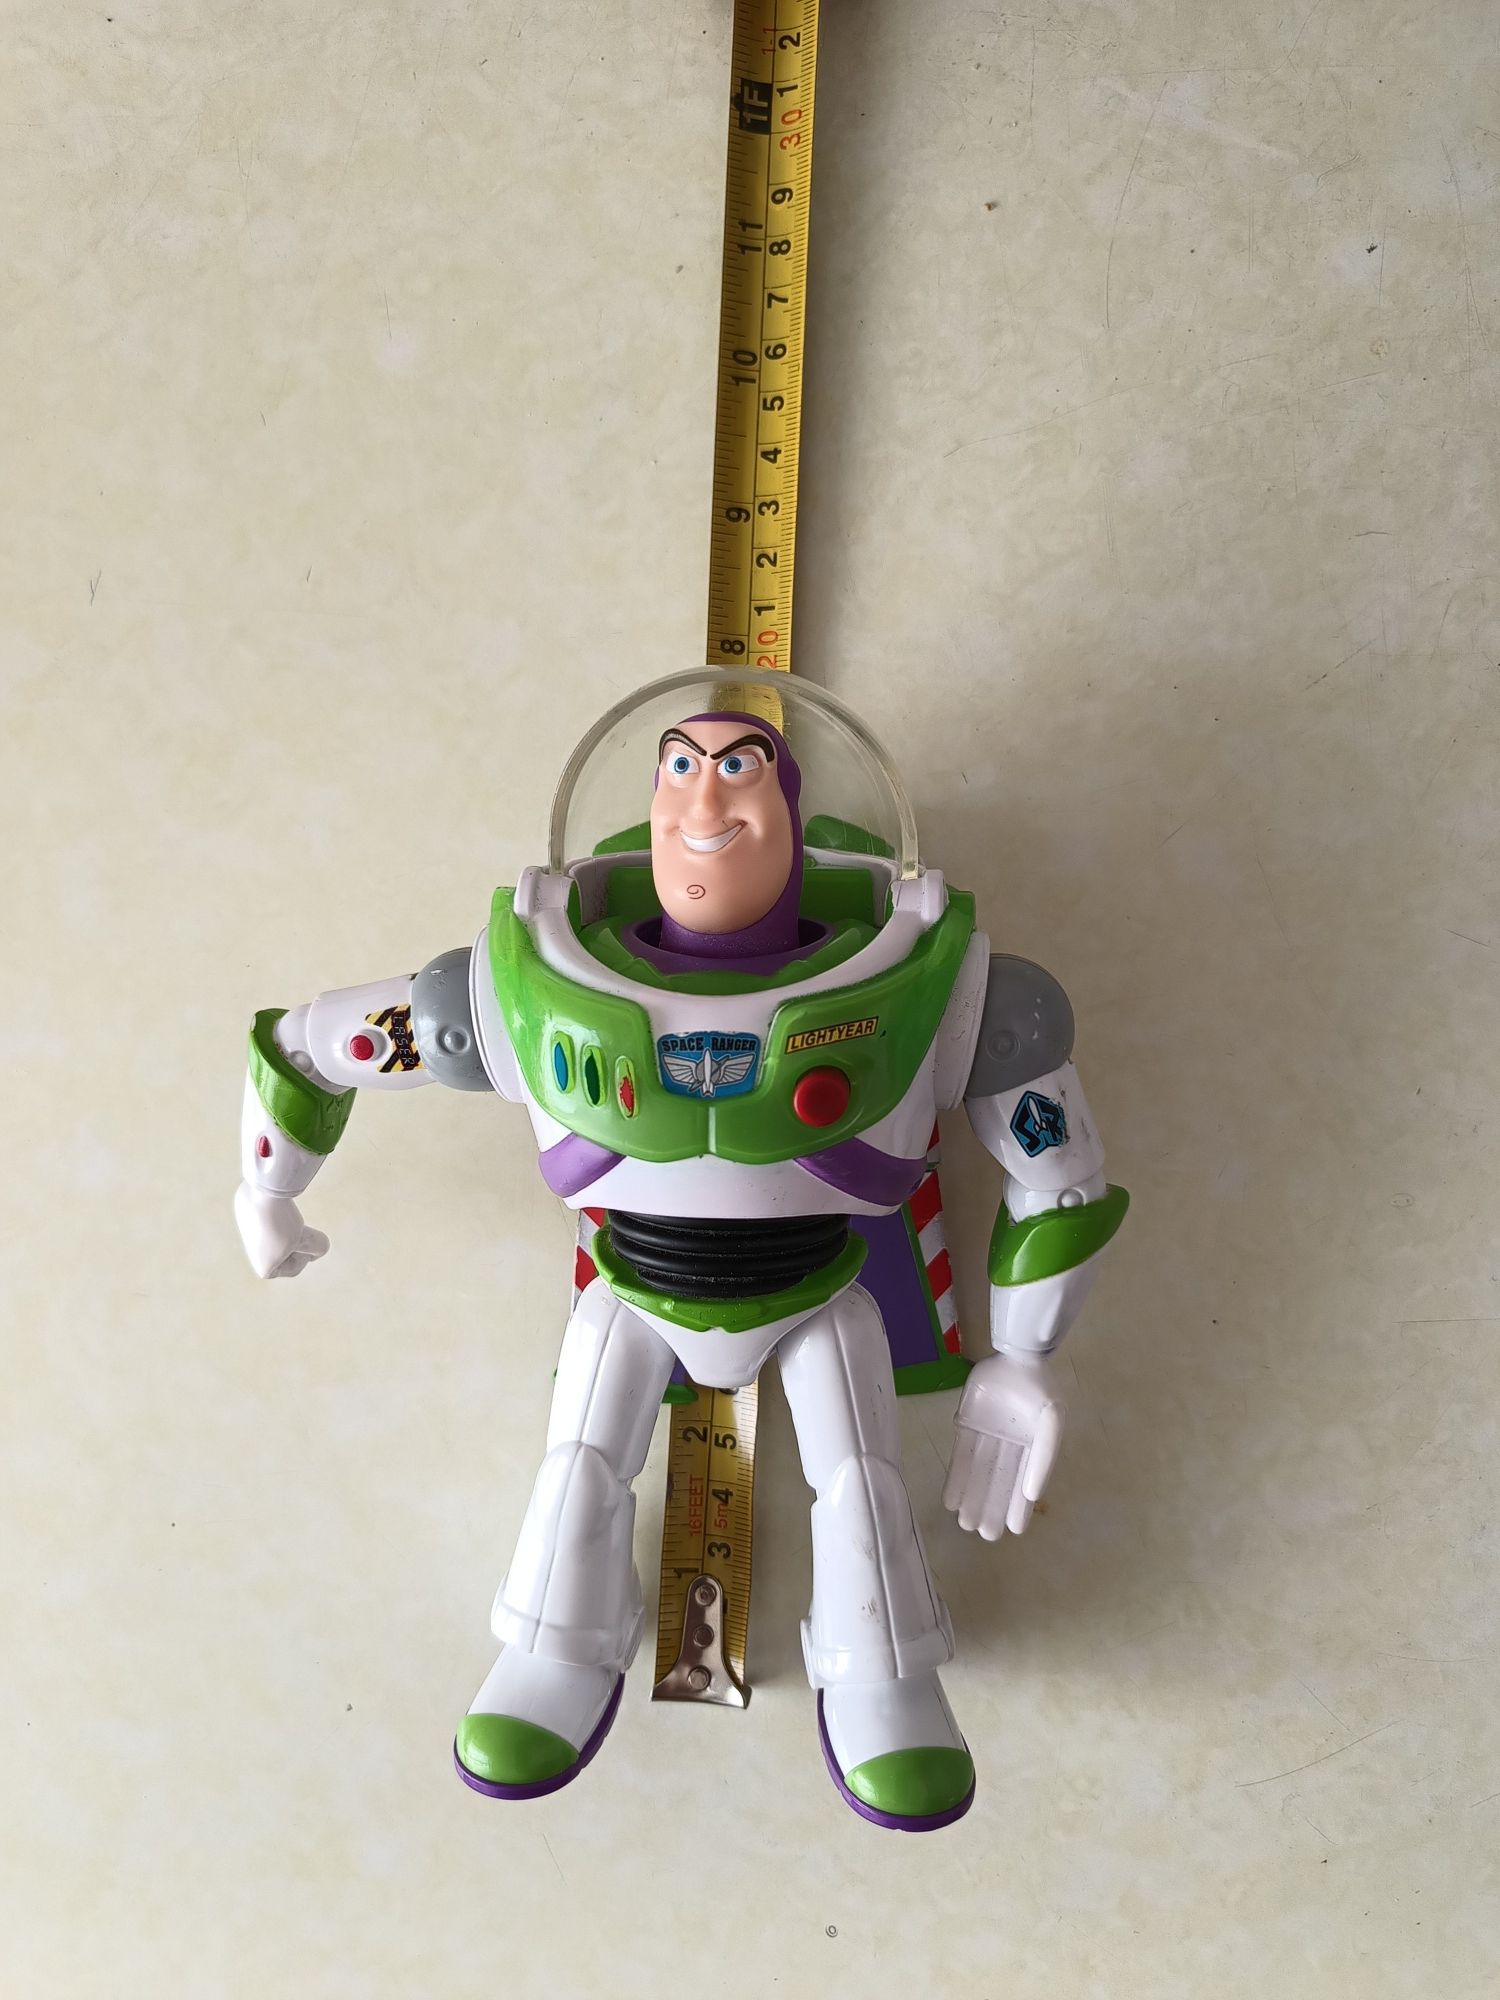 Базз Лайтер  Базз Рятівник  Buzz Lightyear